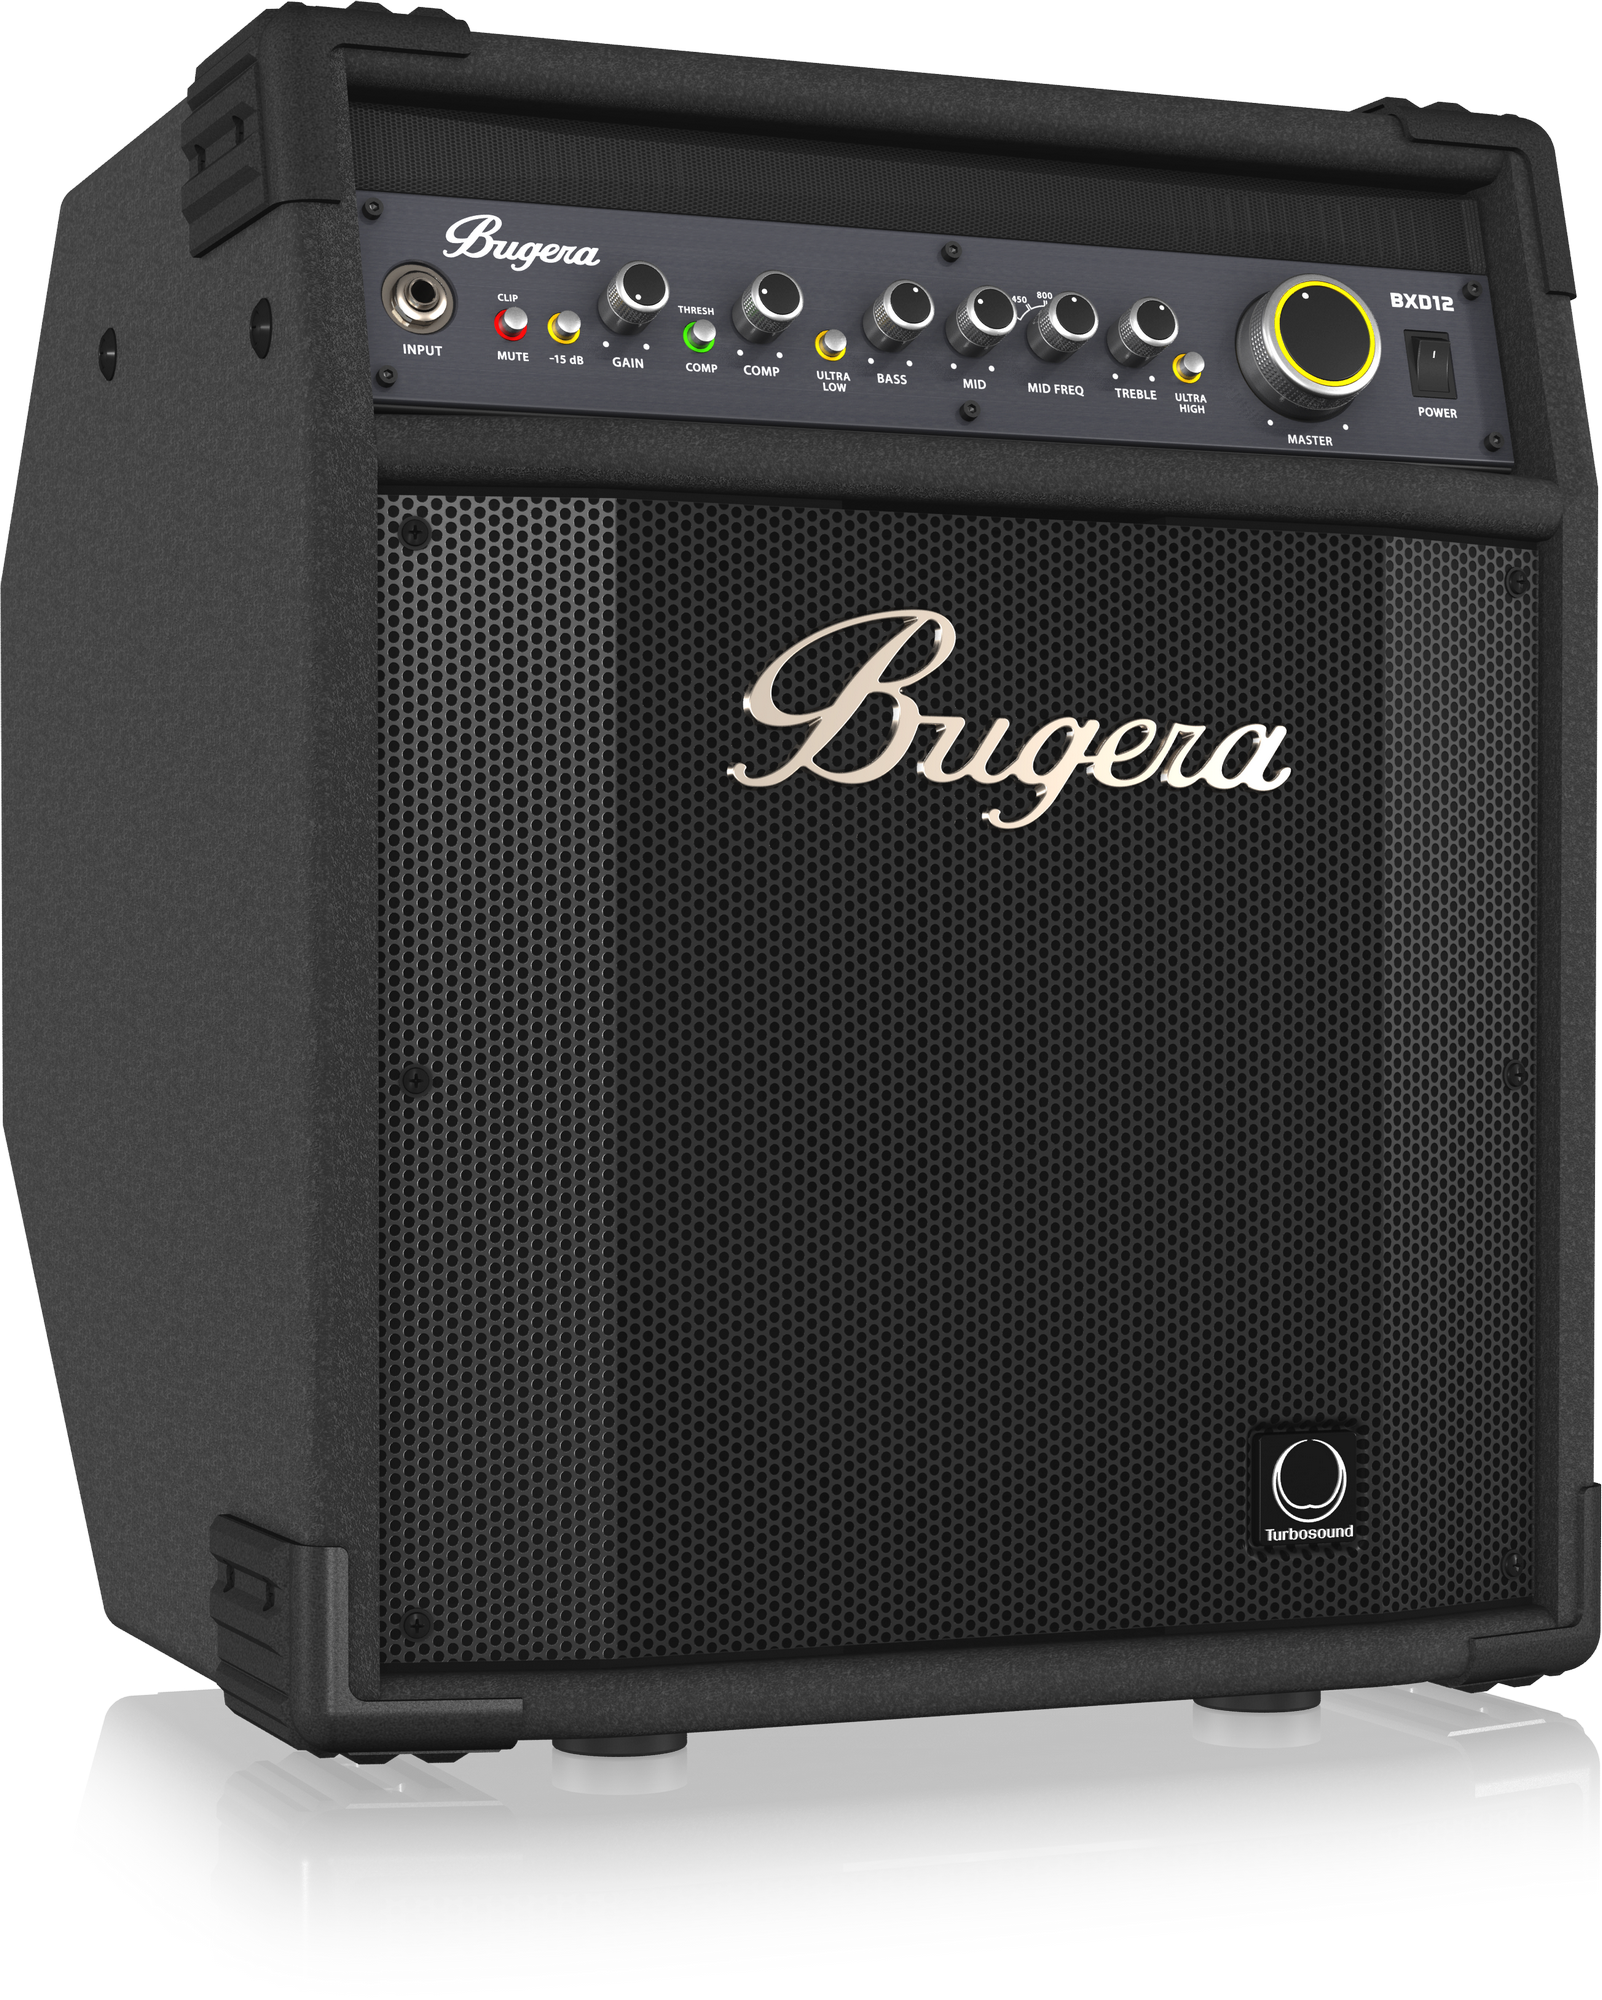 BUGERA BXD12 1000-WATT BASS AMPLIFIER WITH ORIGINAL 12" TURBOSOUND SPEAKER, MOSFET PREAMP, COMPRESSOR AND DYNAMIZER TECHNOLOGY | BUGERA , Zoso Music